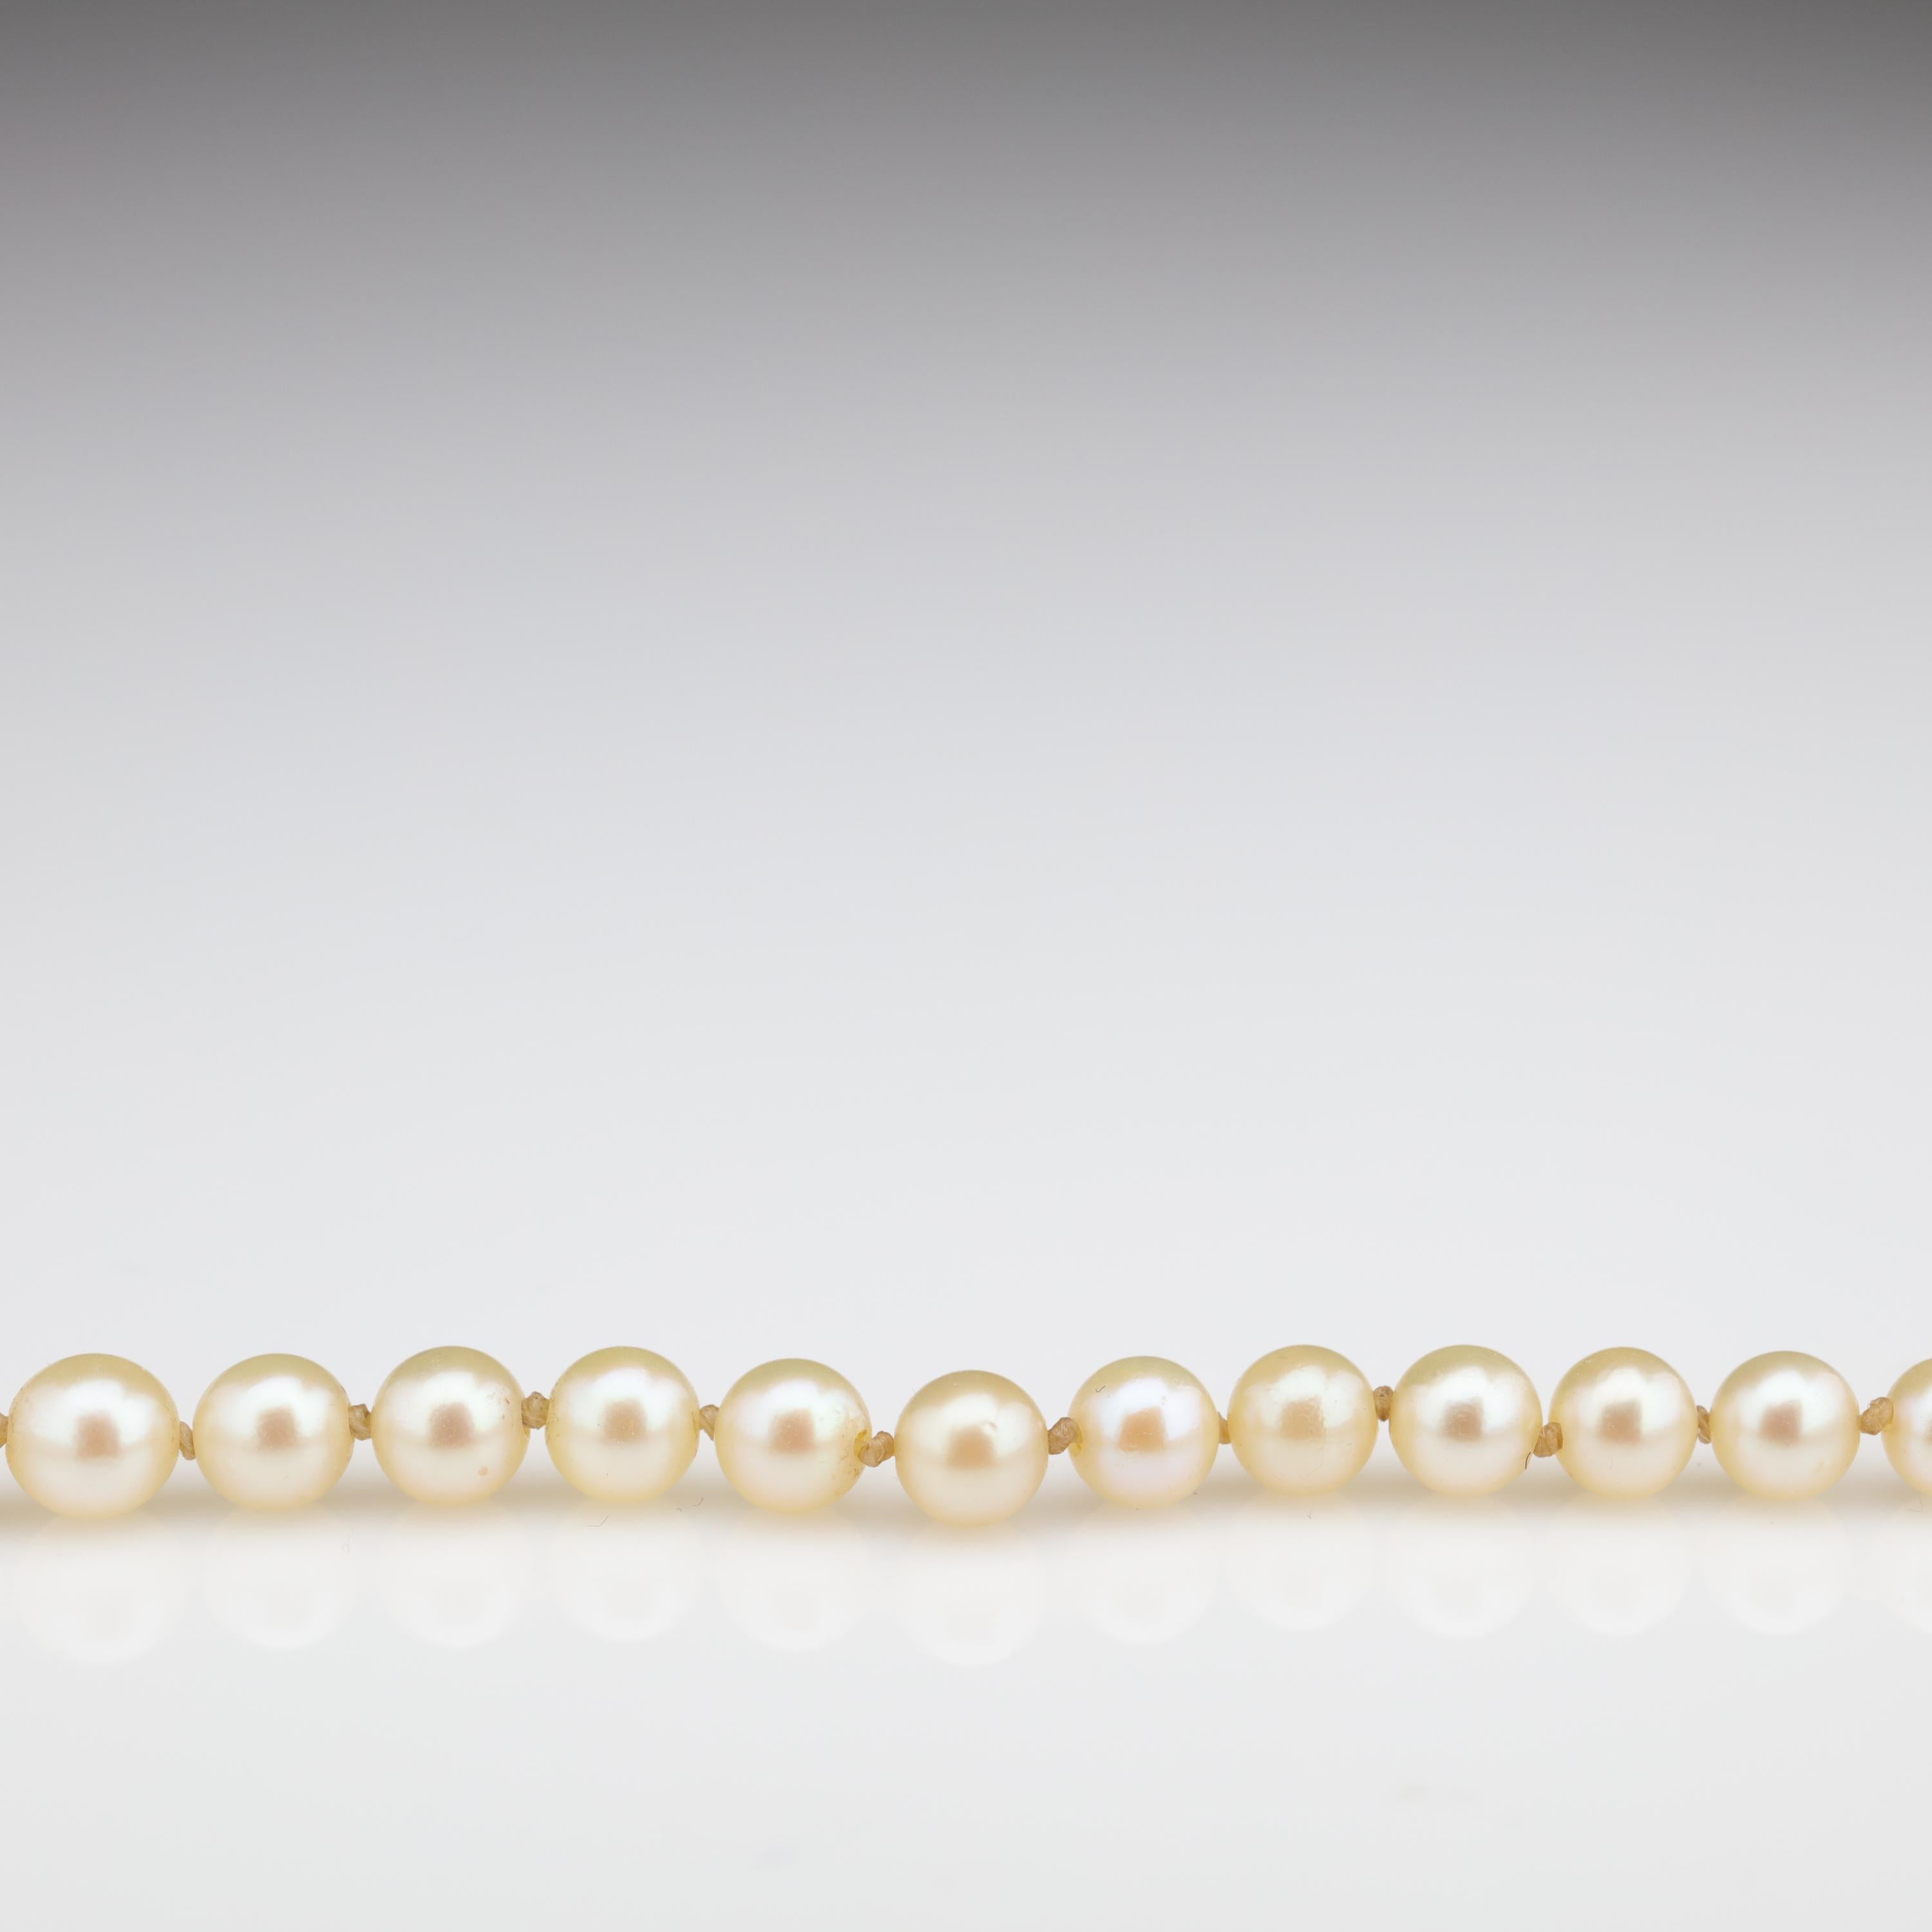 Mikimoto Original Strand of First Viable Cultured Pearls, circa 1920s 4